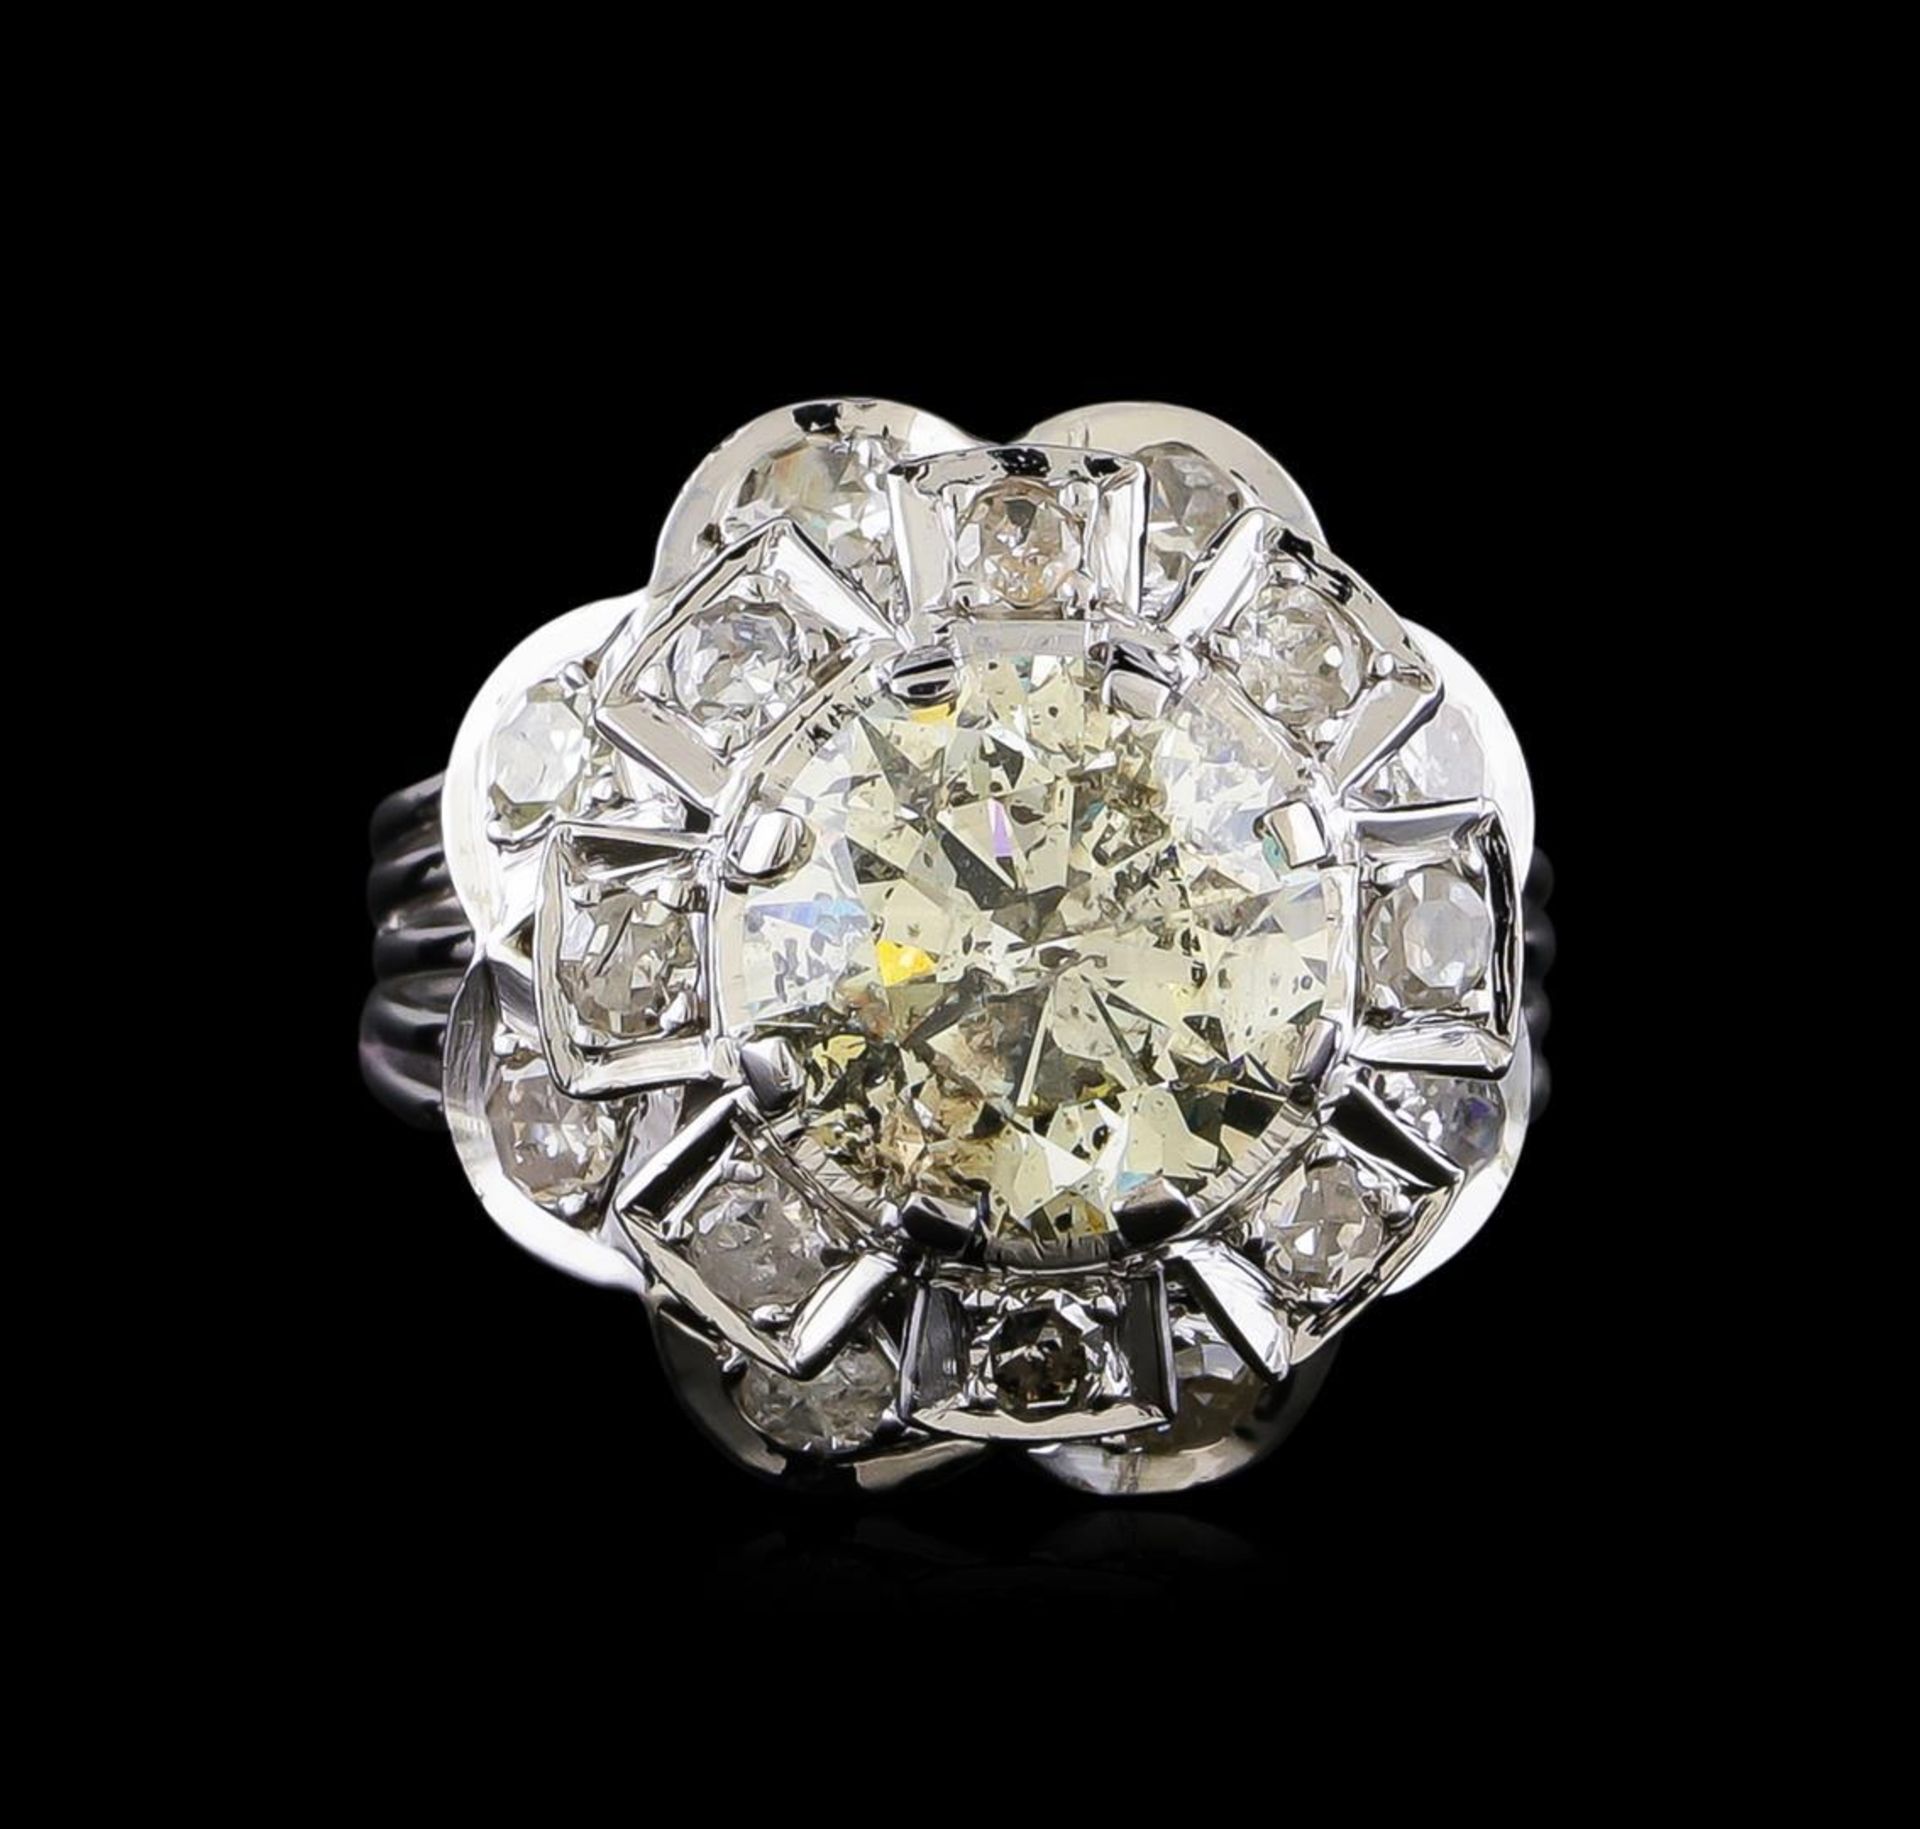 3.65 ctw Diamond Ring - 18KT White Gold - Image 2 of 5